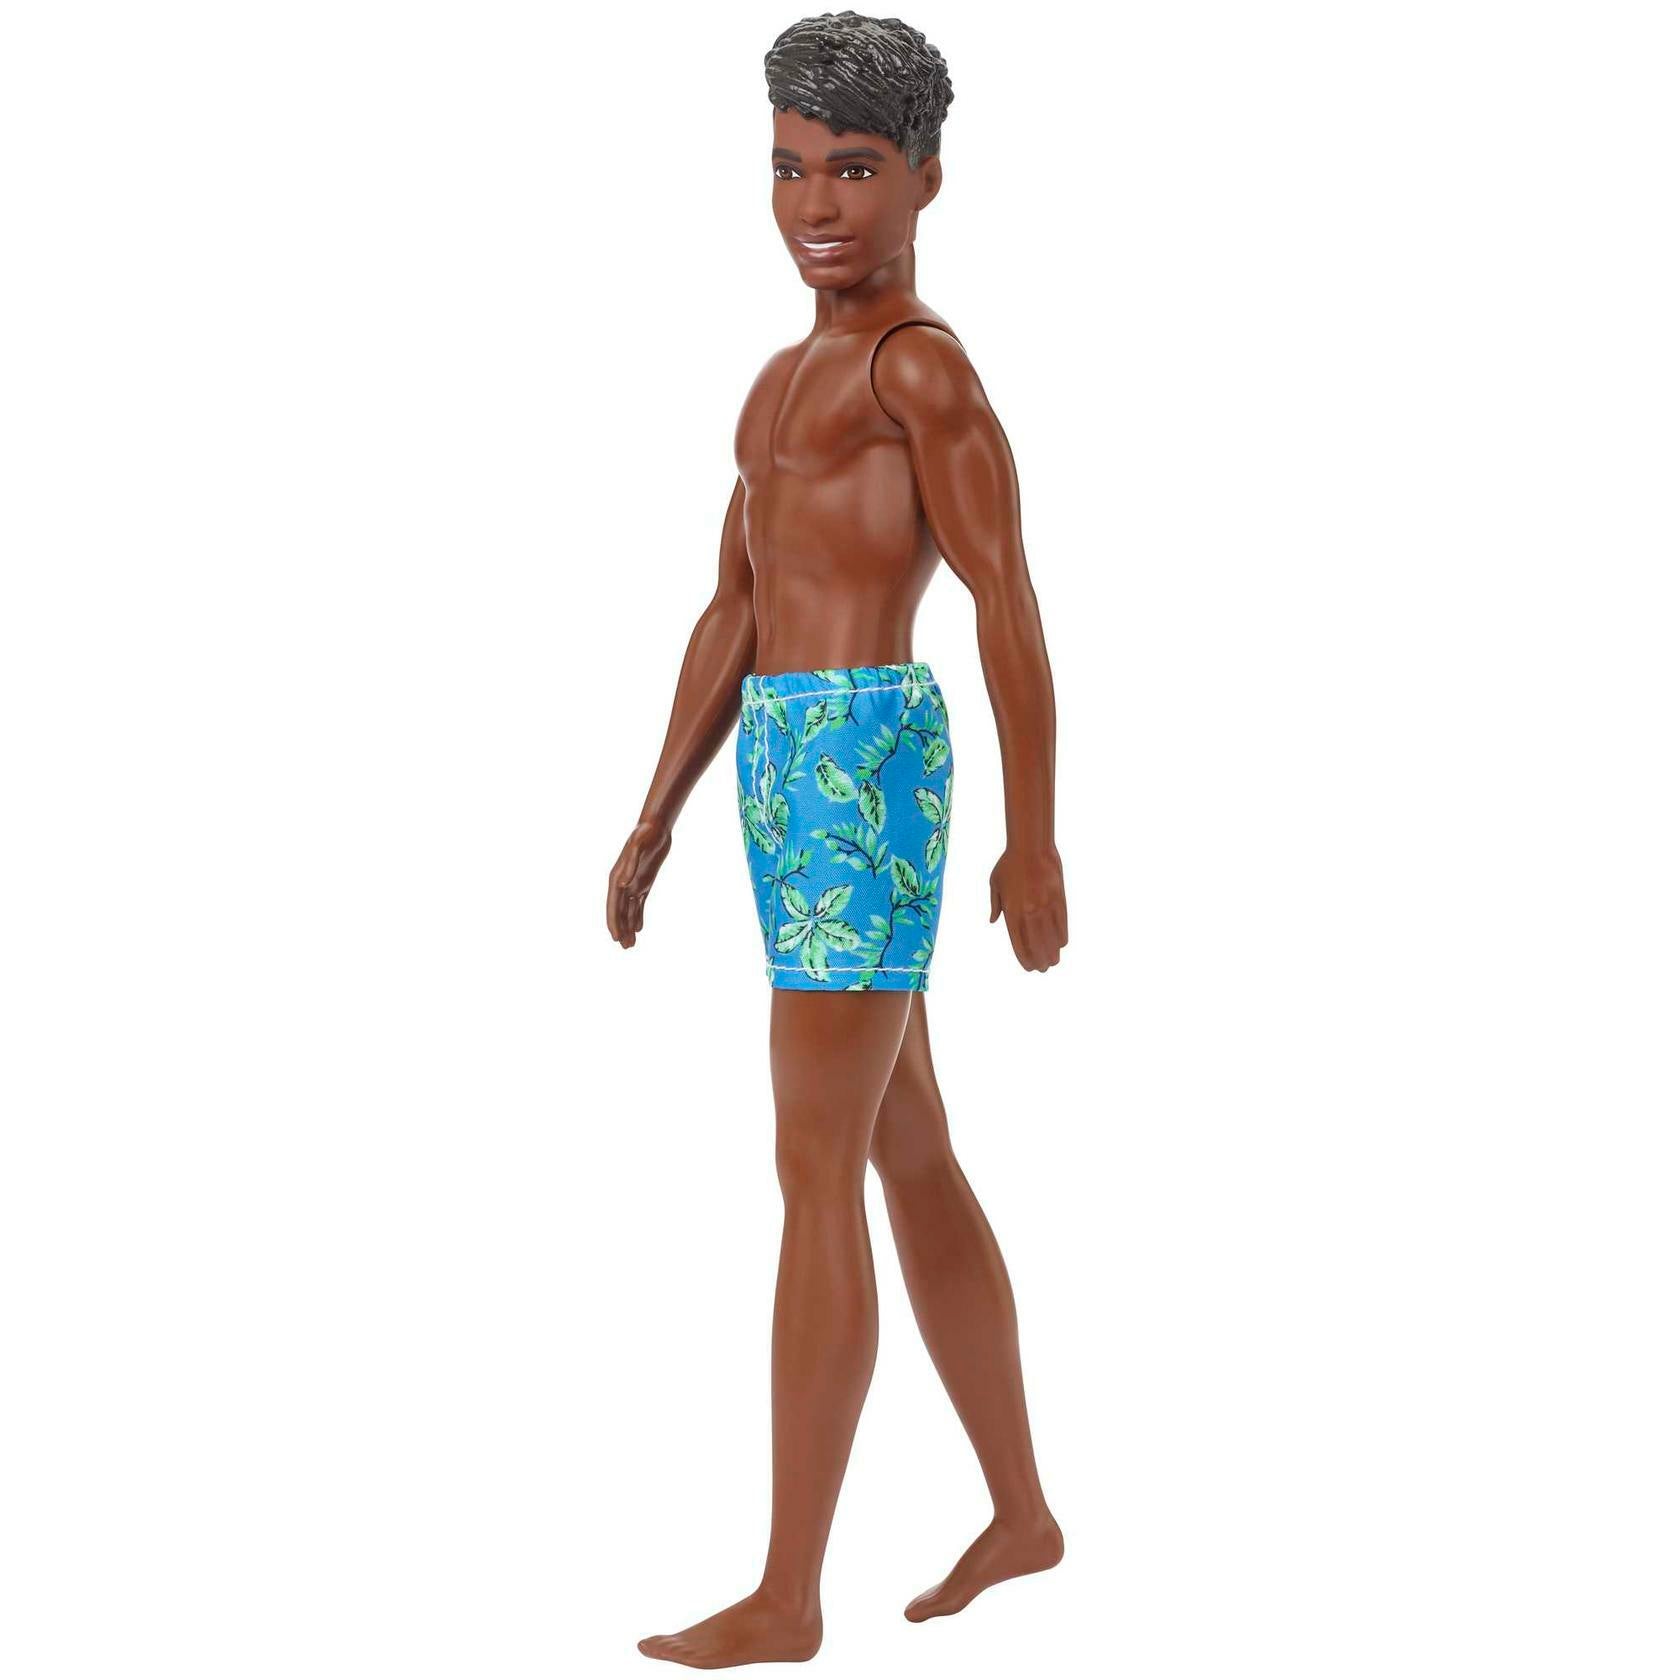 Barbie Ken Beach Doll with Black Hair Dressed in Blue Tropical Swim Trunks